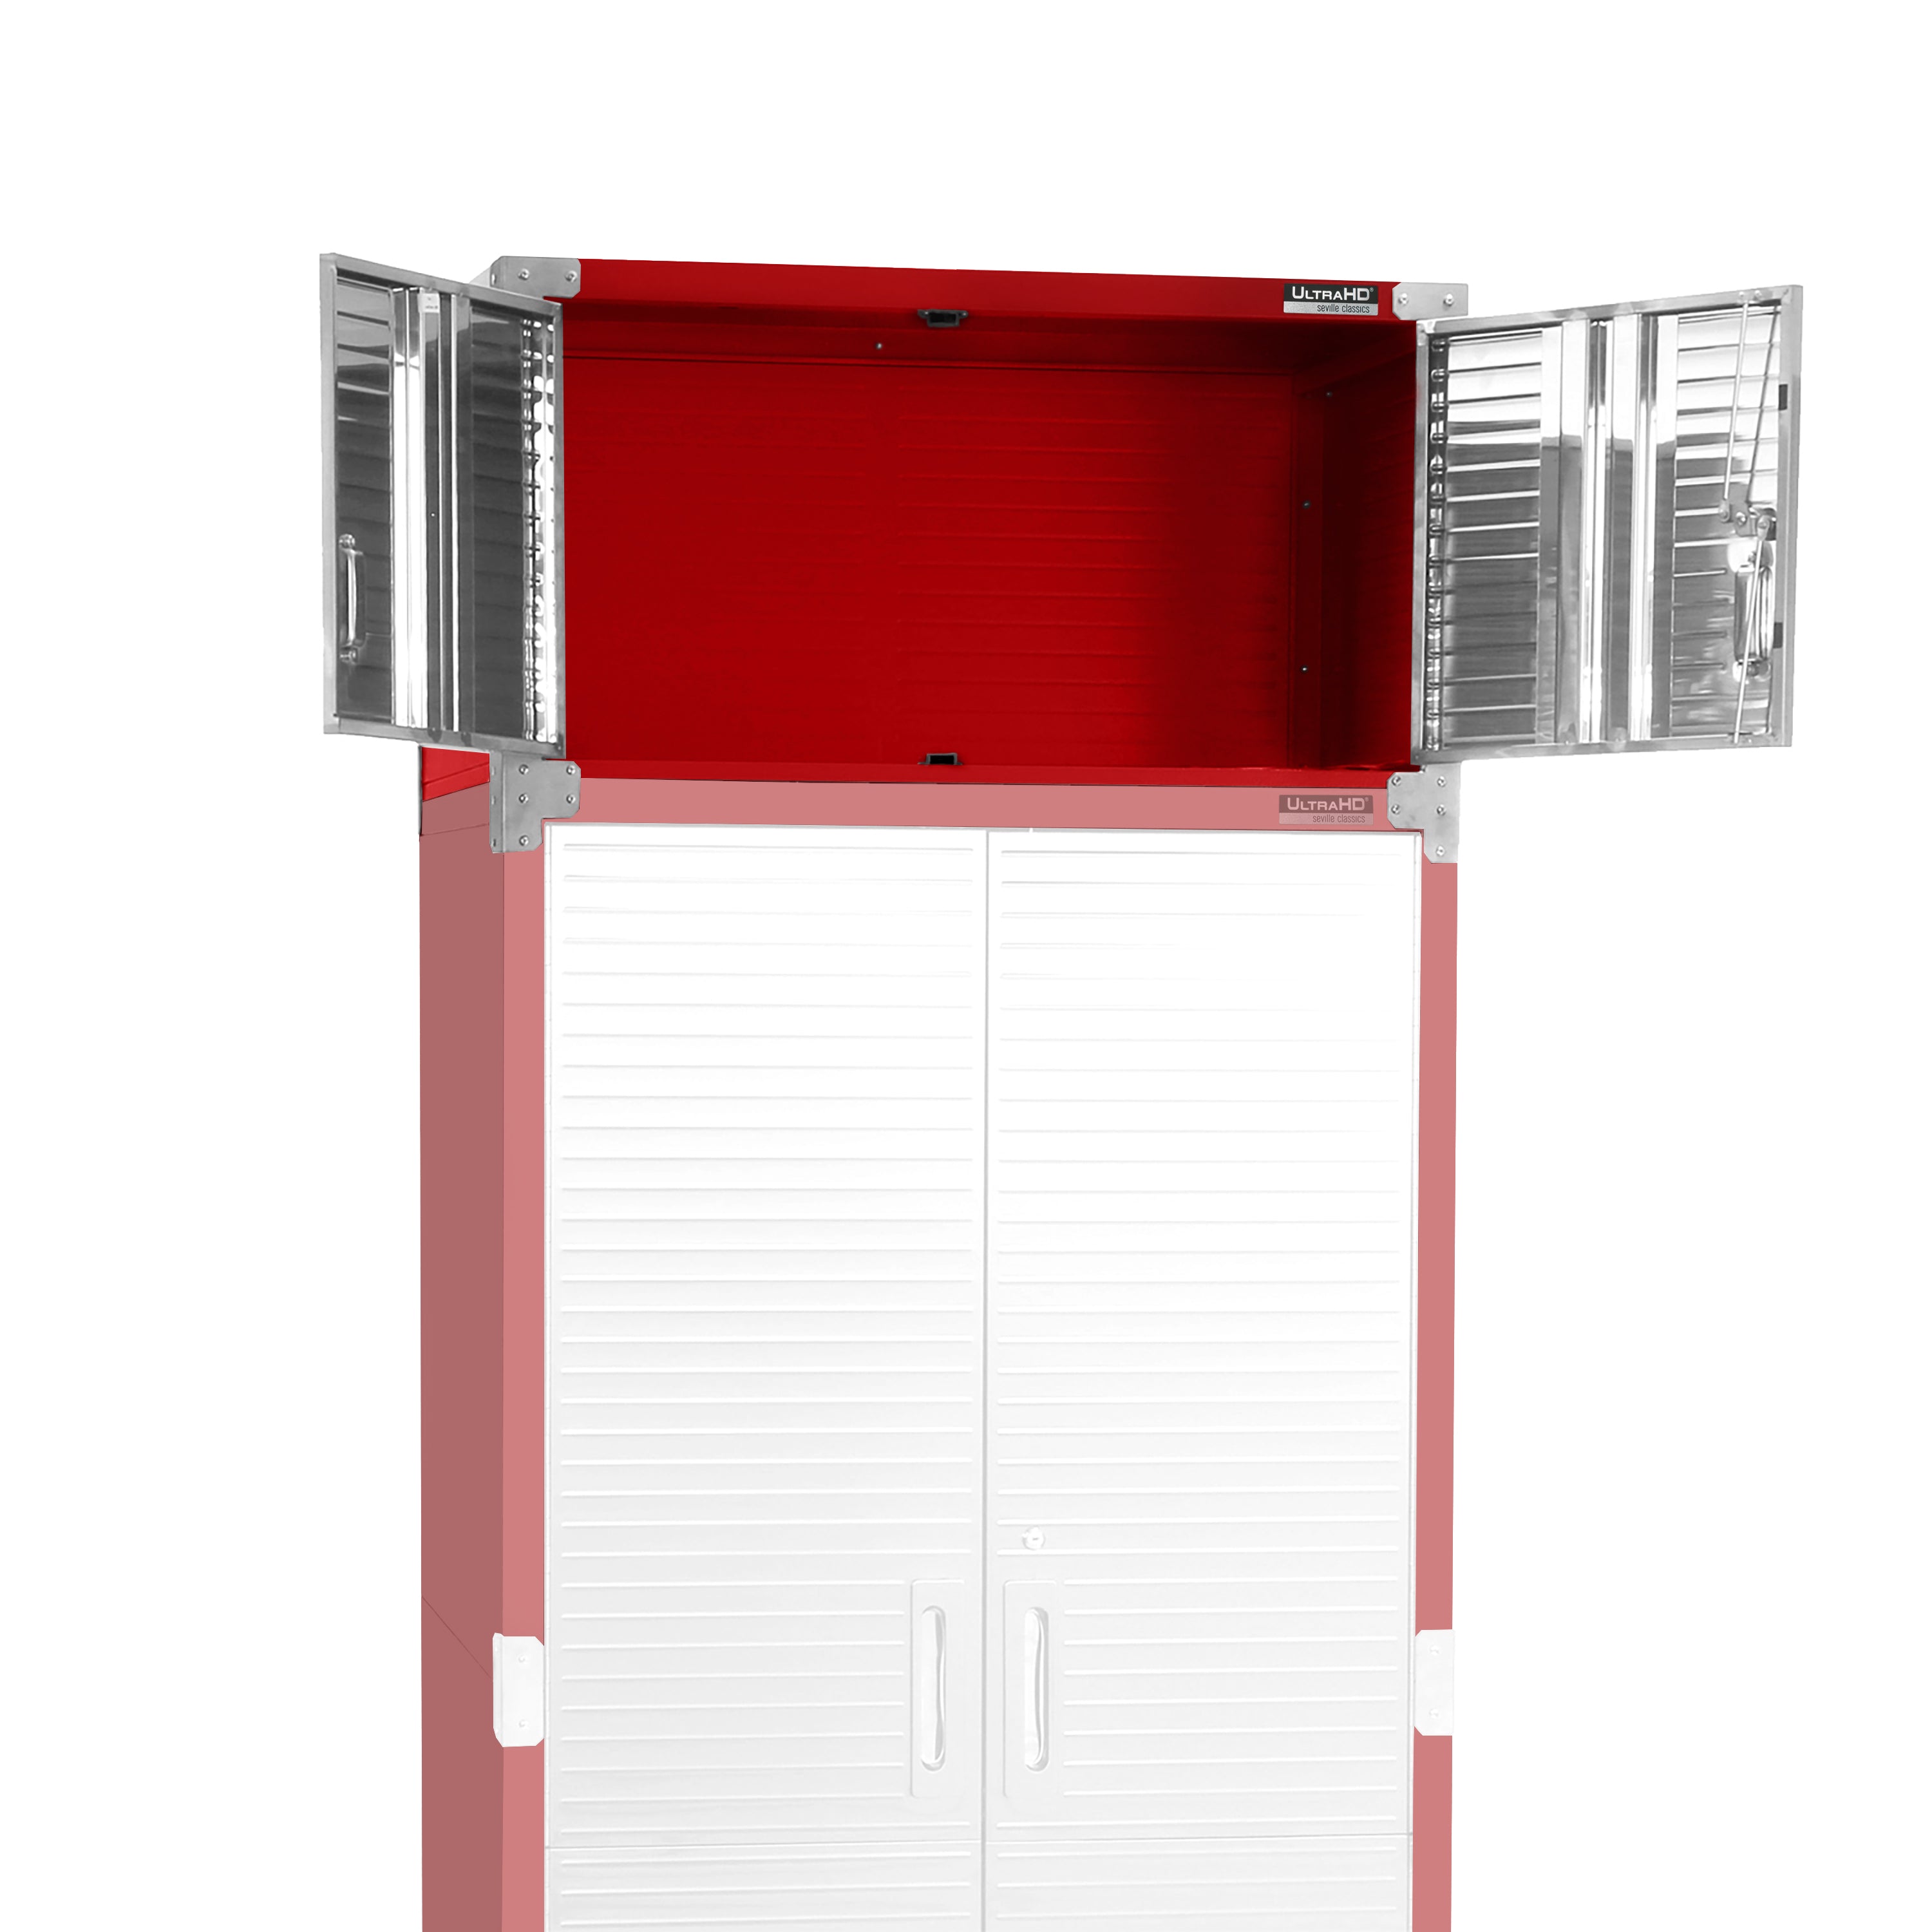 Seville Classics WEB347  48 UltraHD Stacker Cabinet